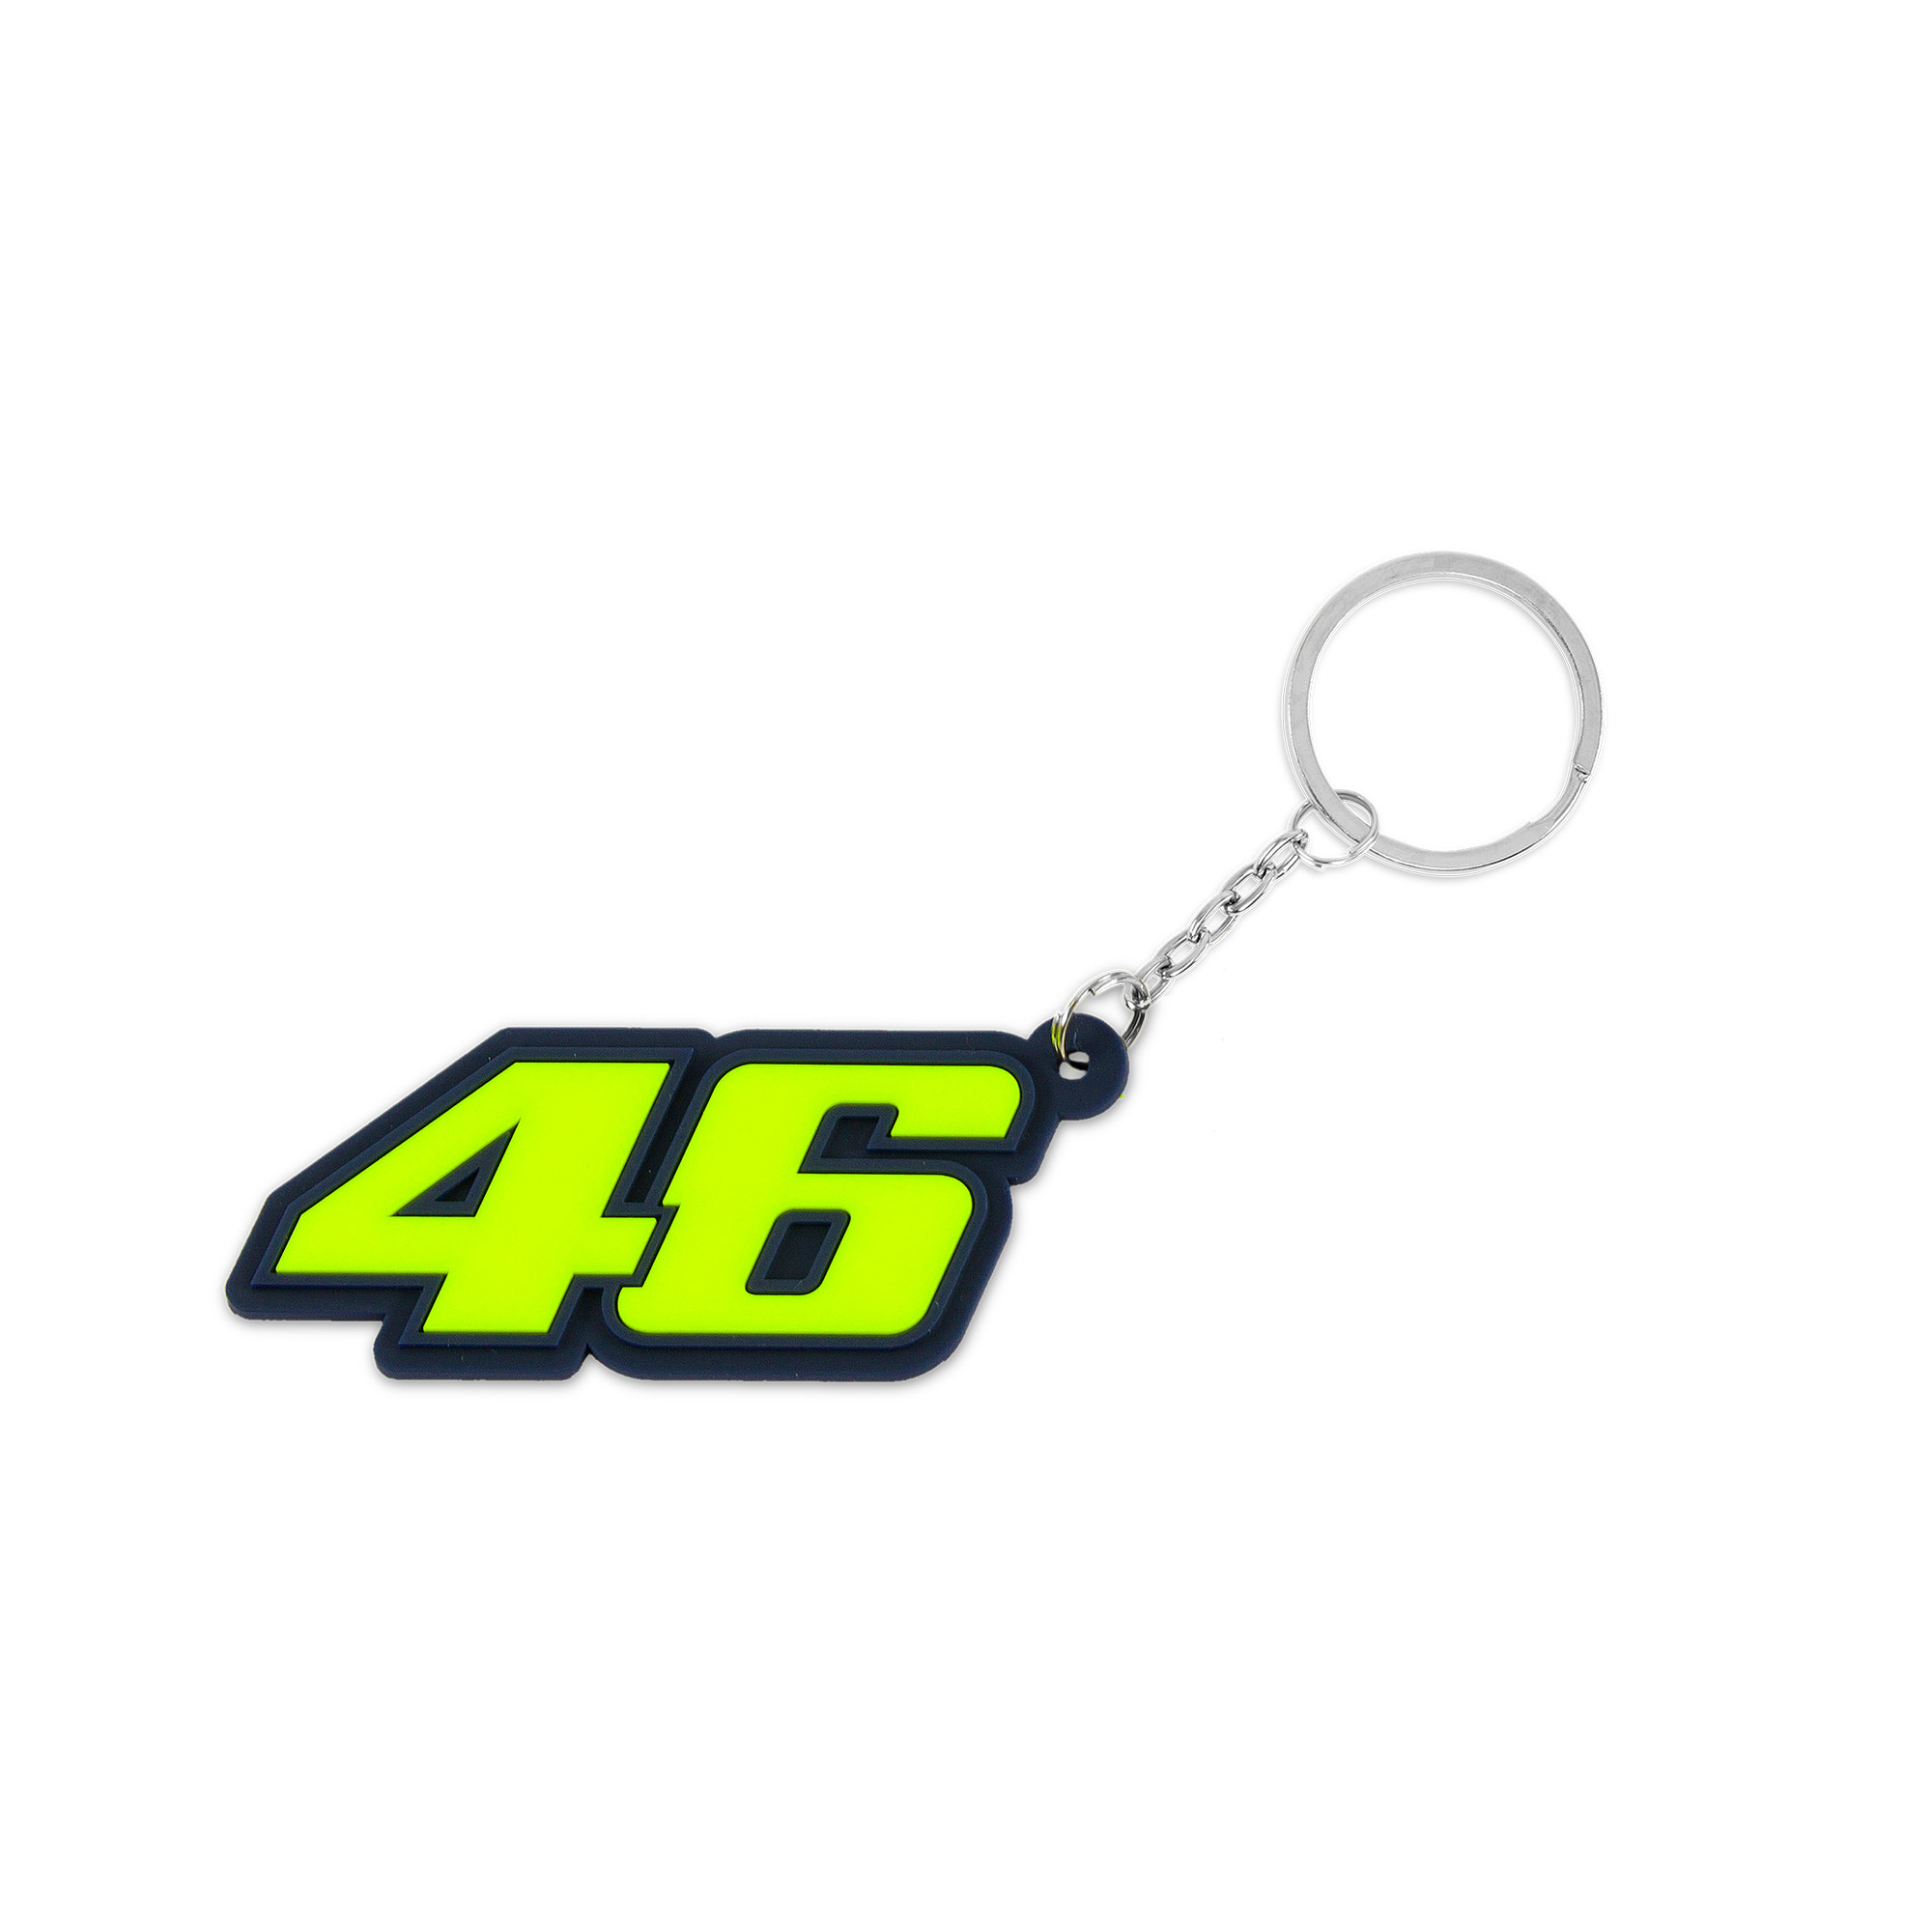 Valentino Rossi keyring "46" - yellow